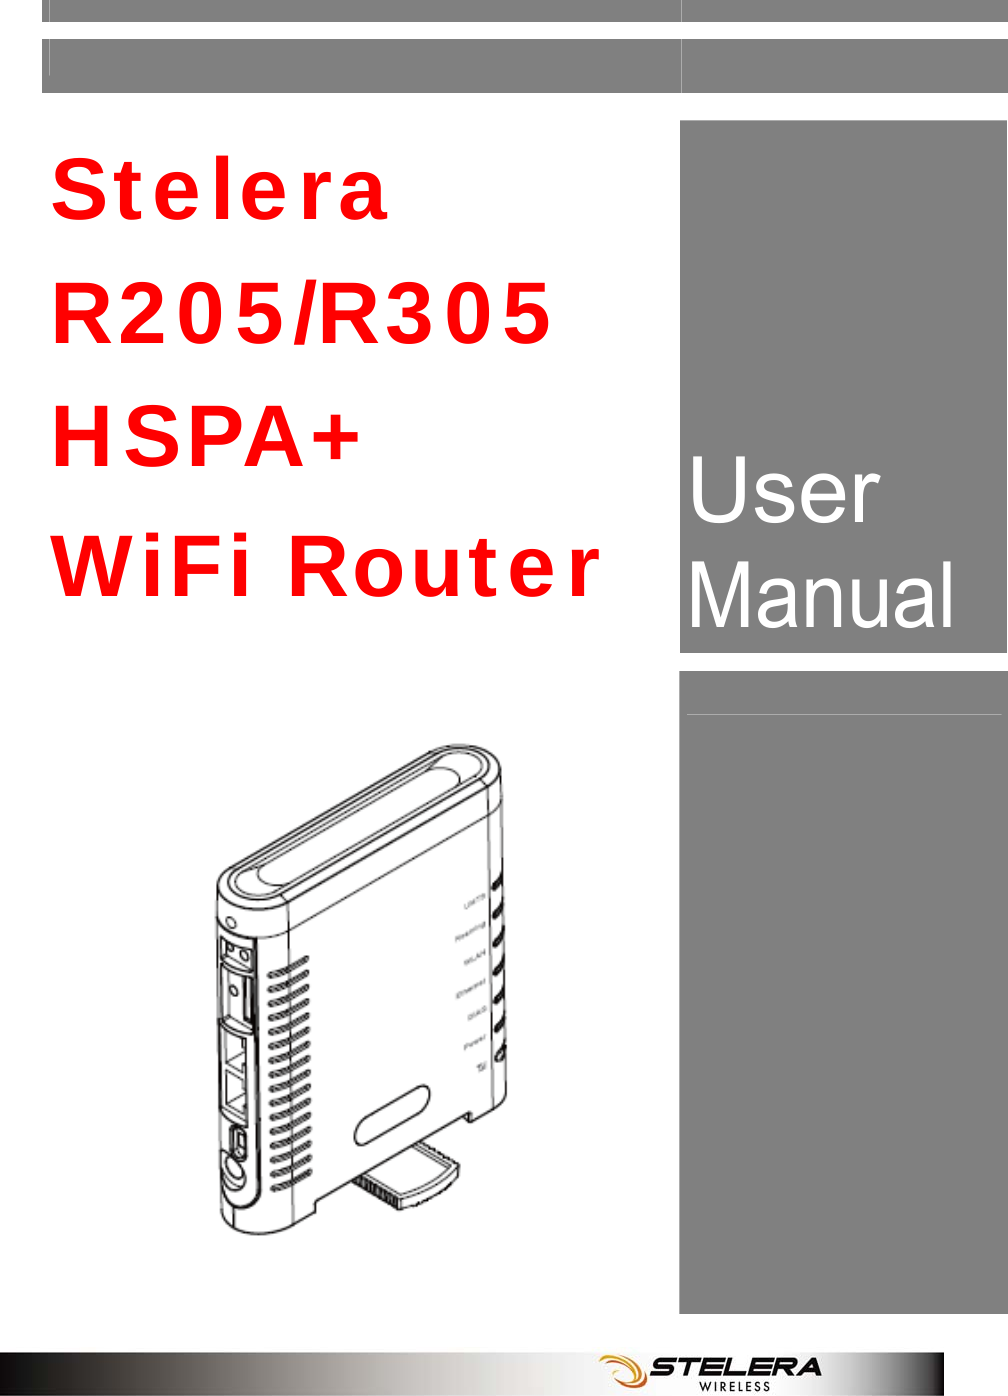              Stelera R205/R305  HSPA+ WiFi Router User Manual      